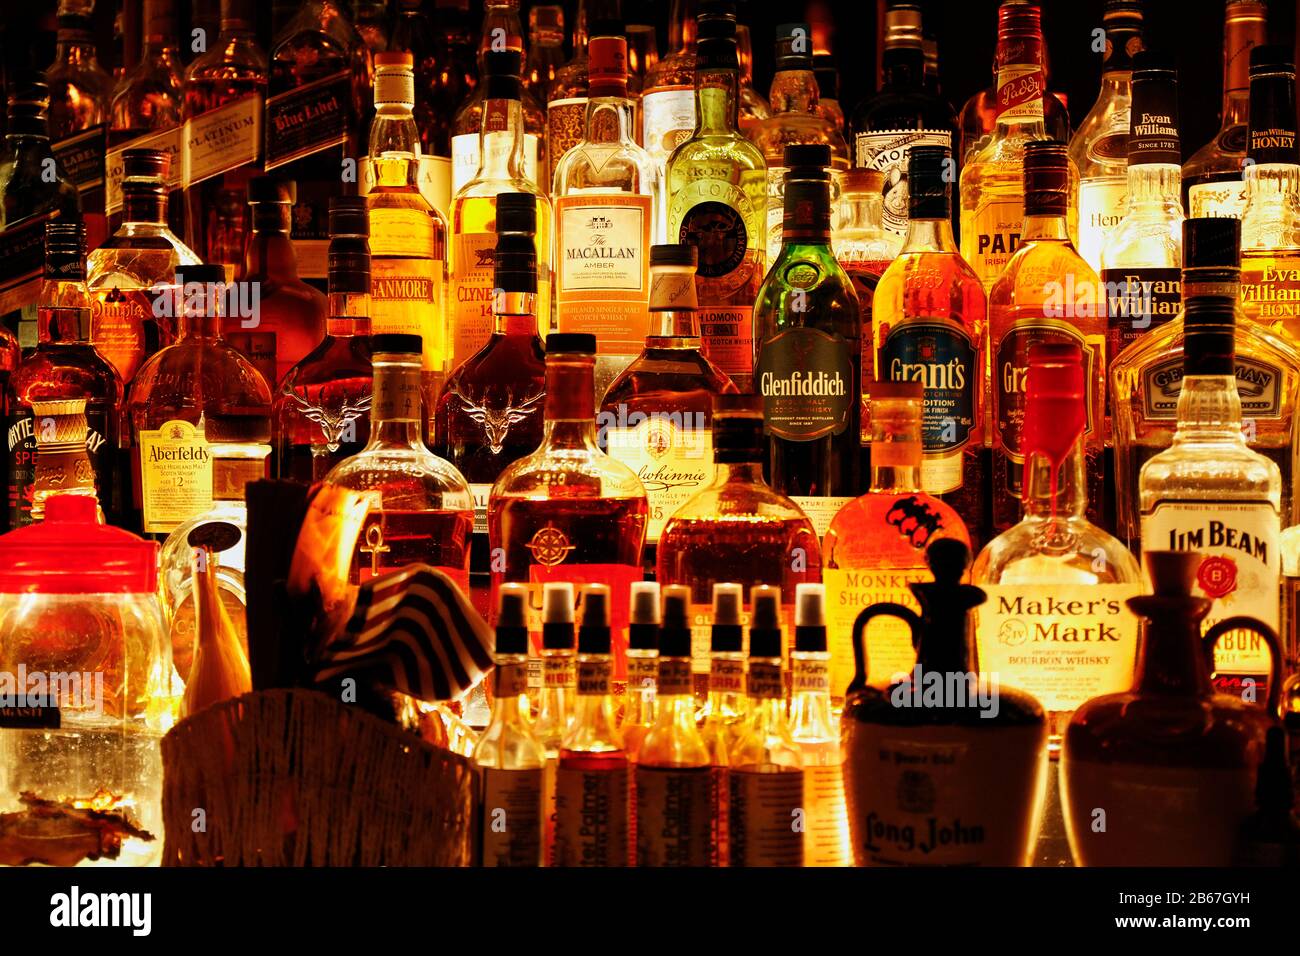 Bottles of spirits inside a cocktail bar. Stock Photo